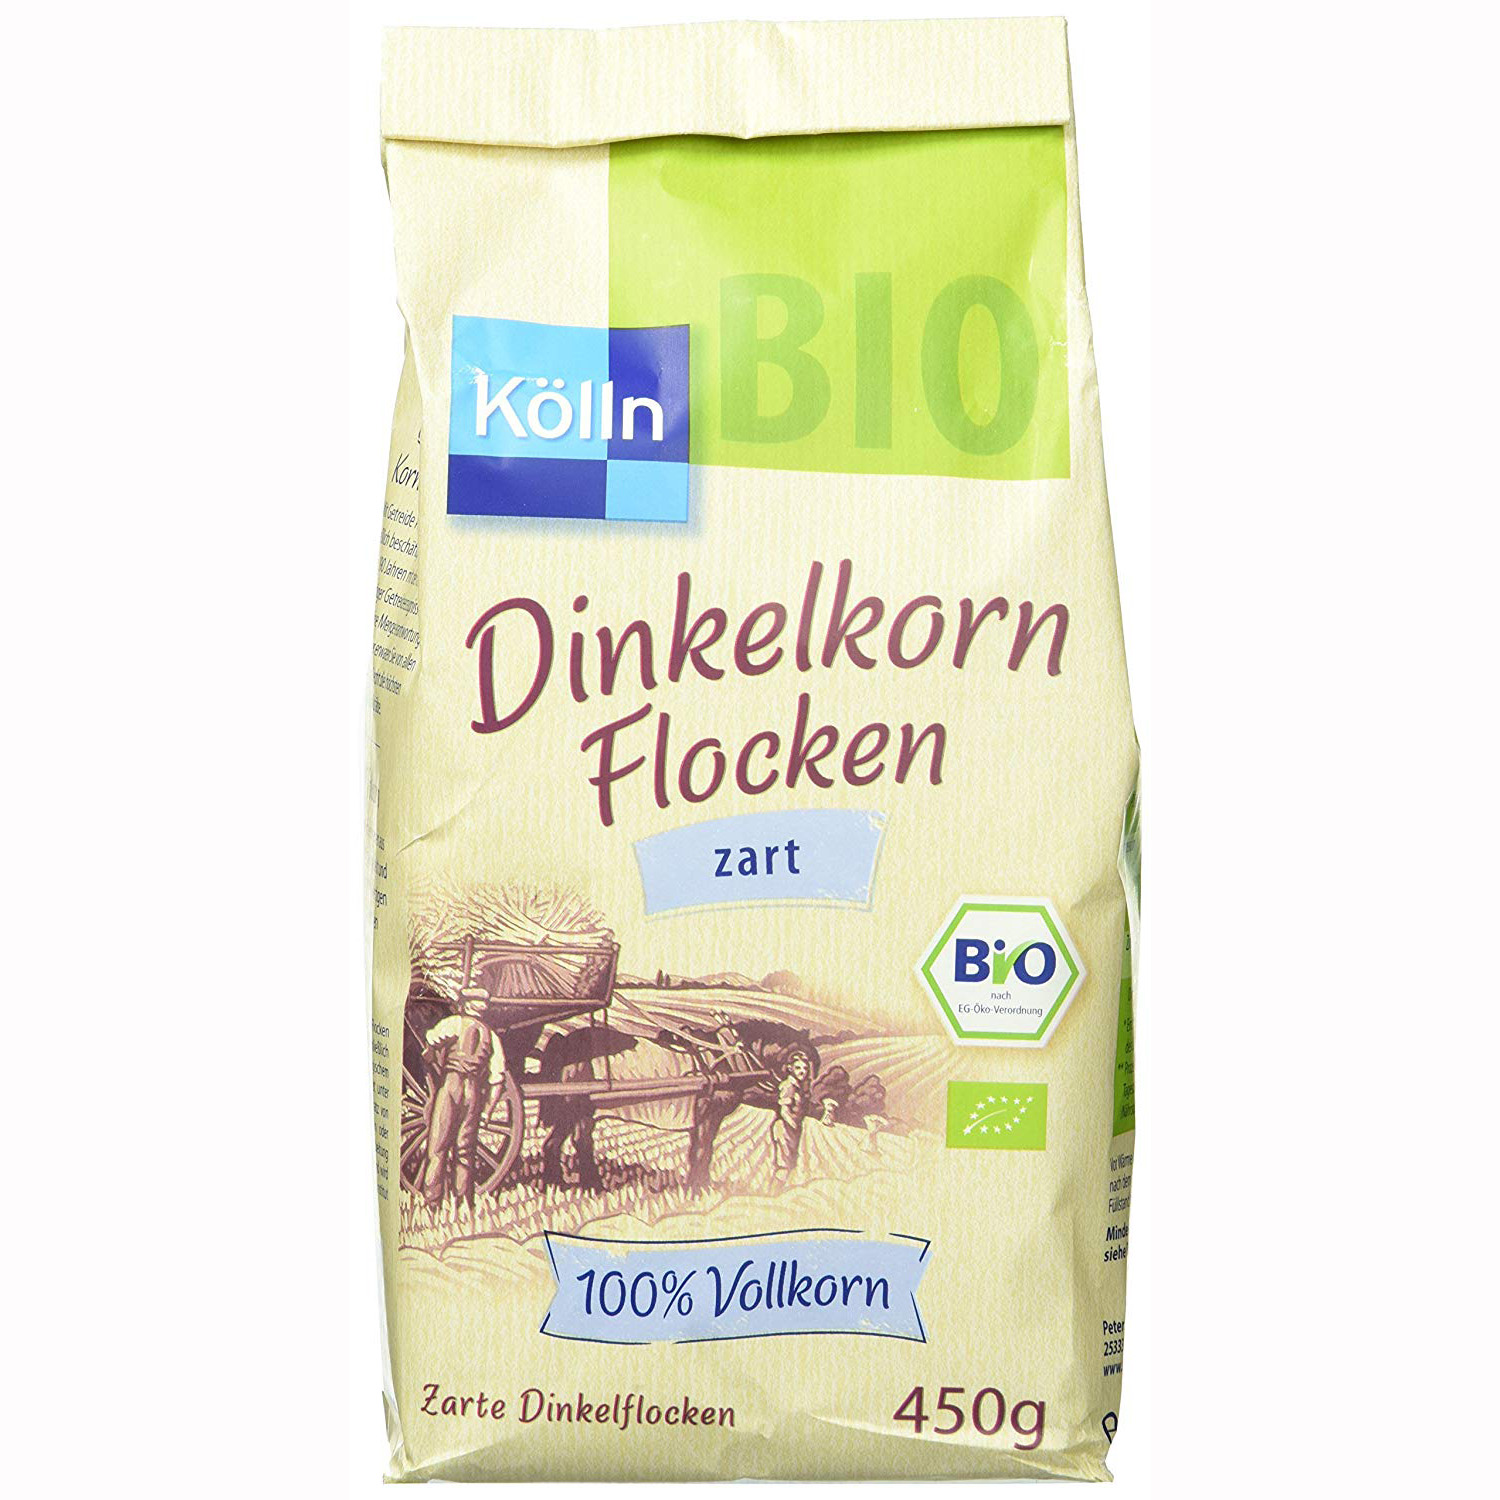 Kölln organic spelt grain flakes tender Cereal Products